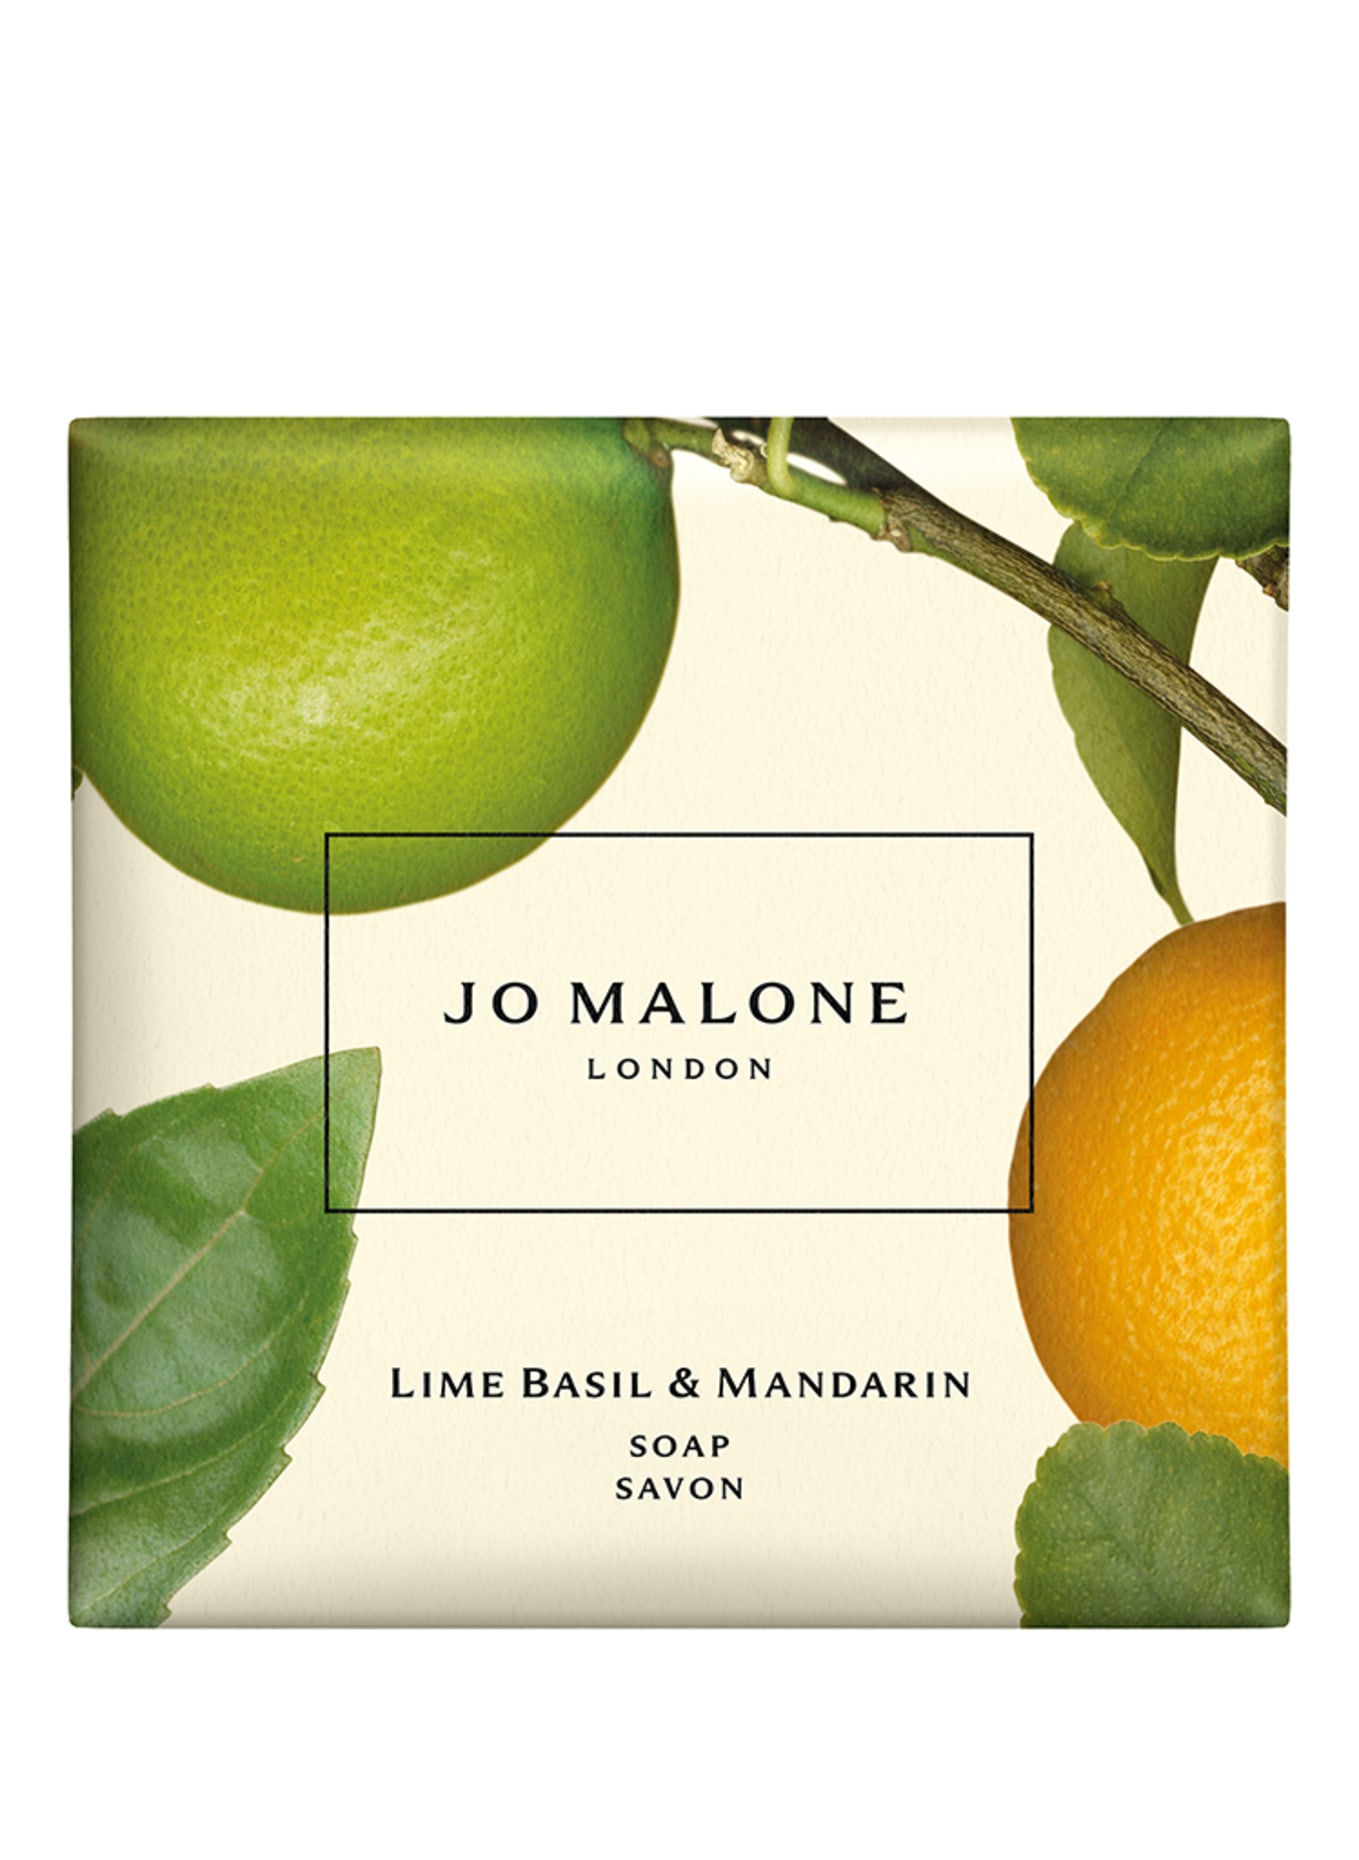 JO MALONE LONDON LIME BASIL & MANDARIN SOAP (Obrázek 1)